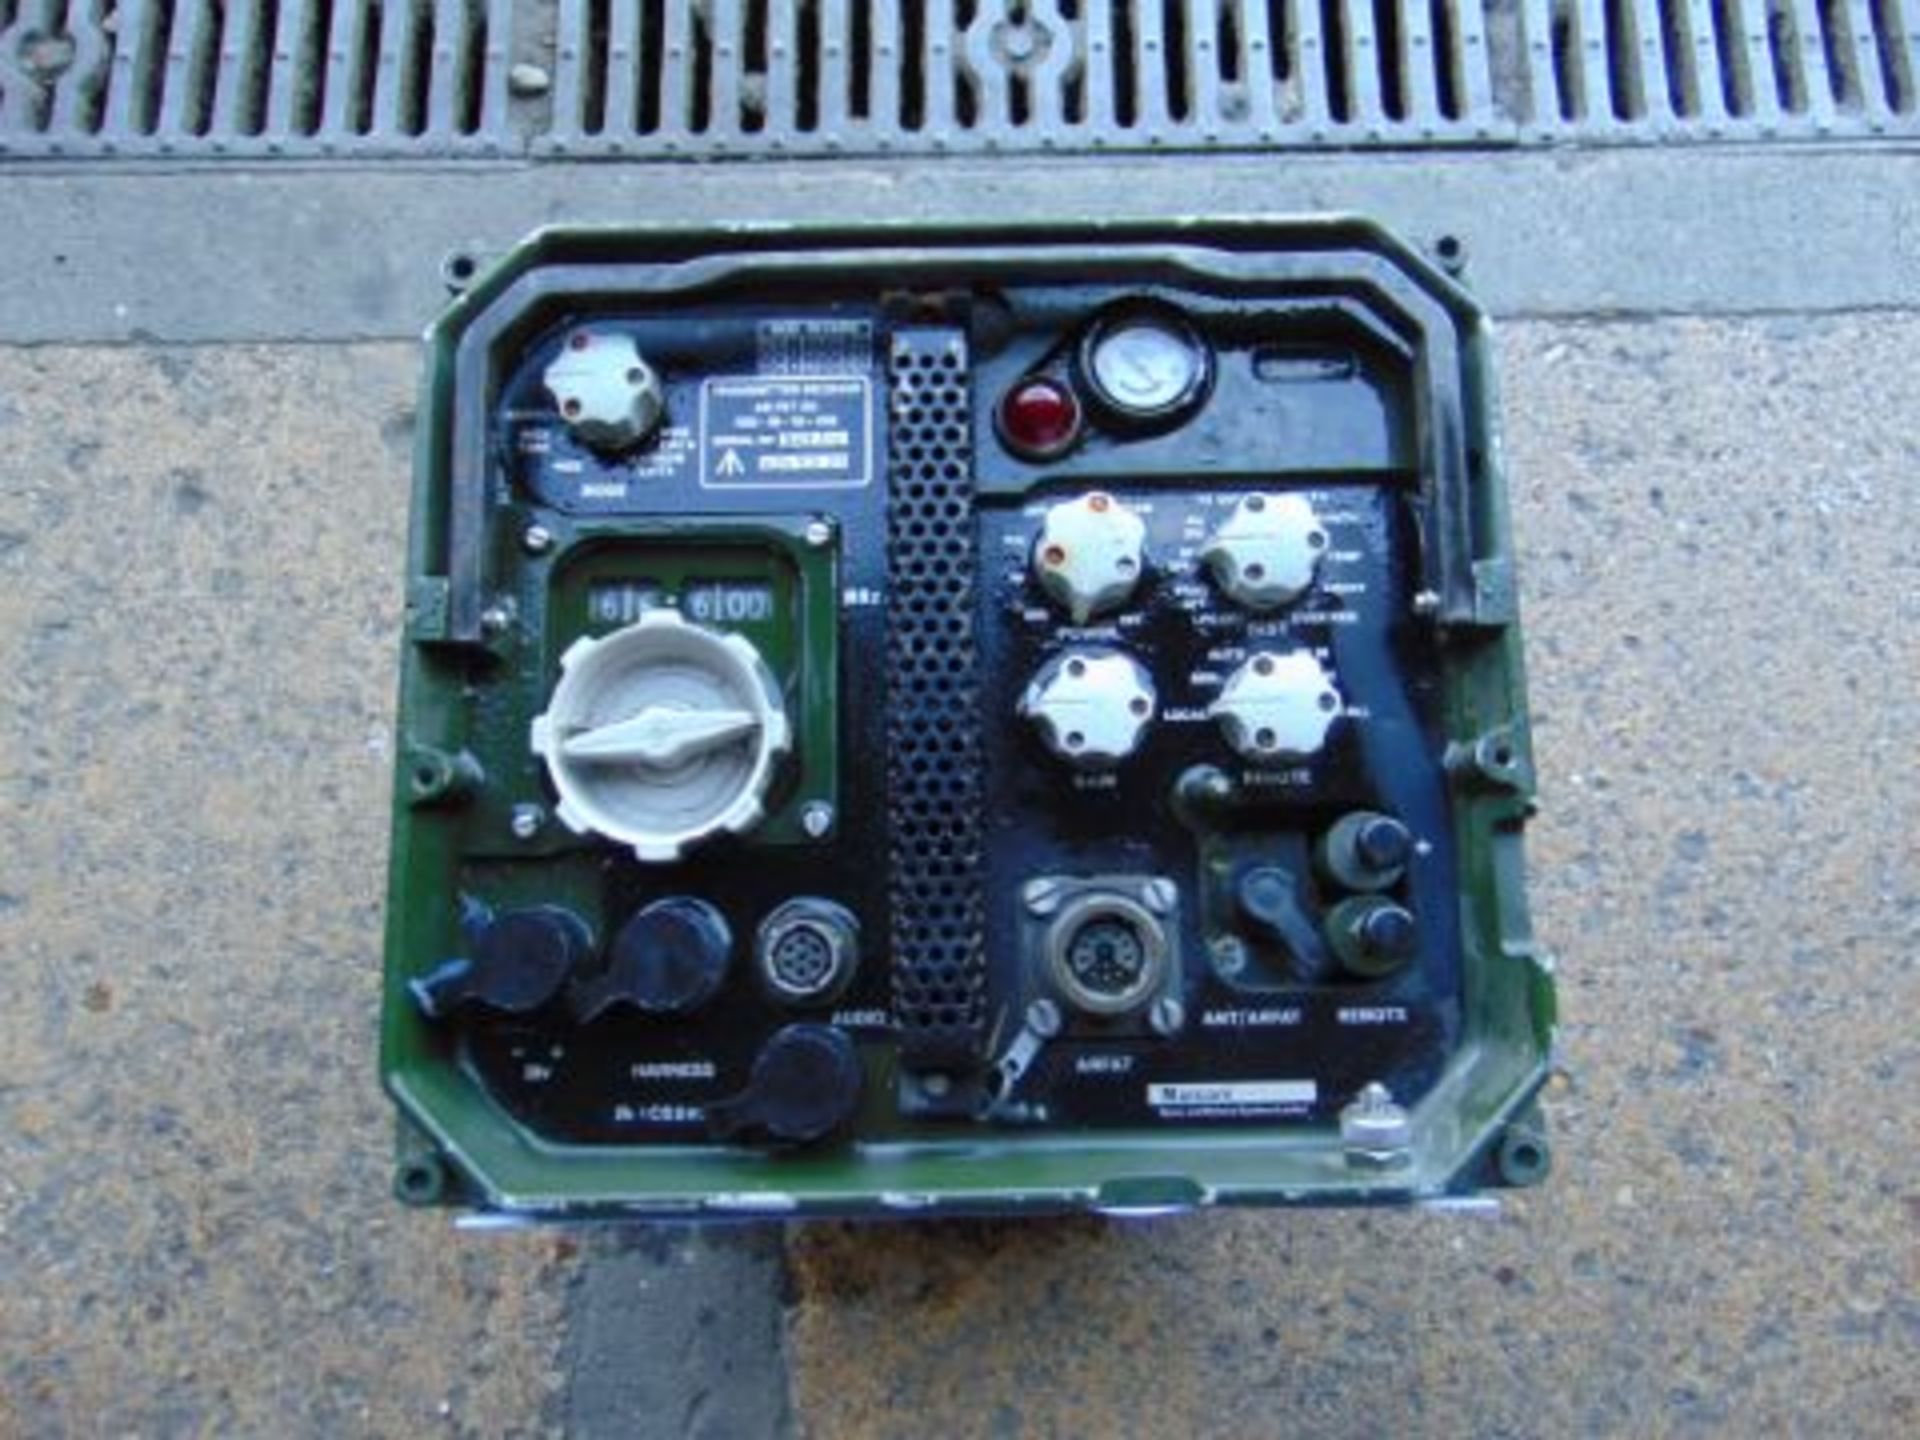 1 x Clansman UK RT 353 Transmitter Reciever VHF for Vehicles ETC